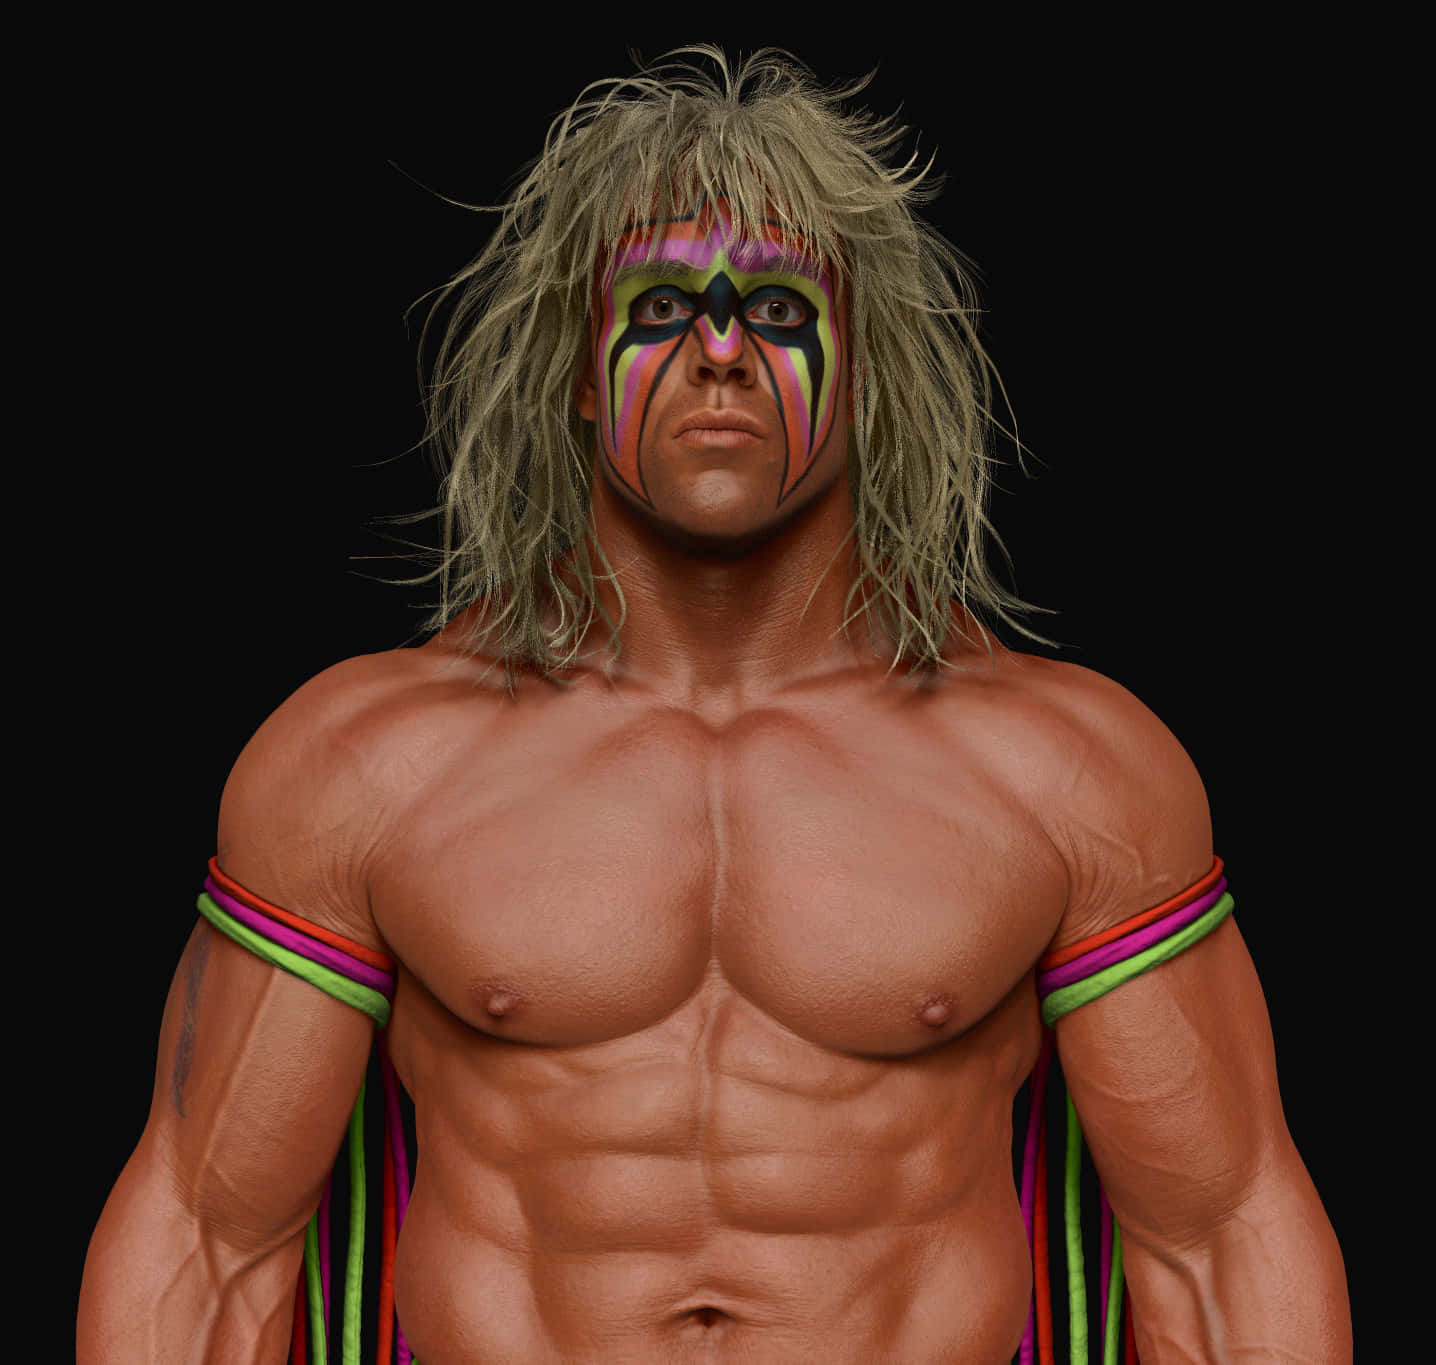 Wwe Wrestler Ultimate Warrior Digital Art